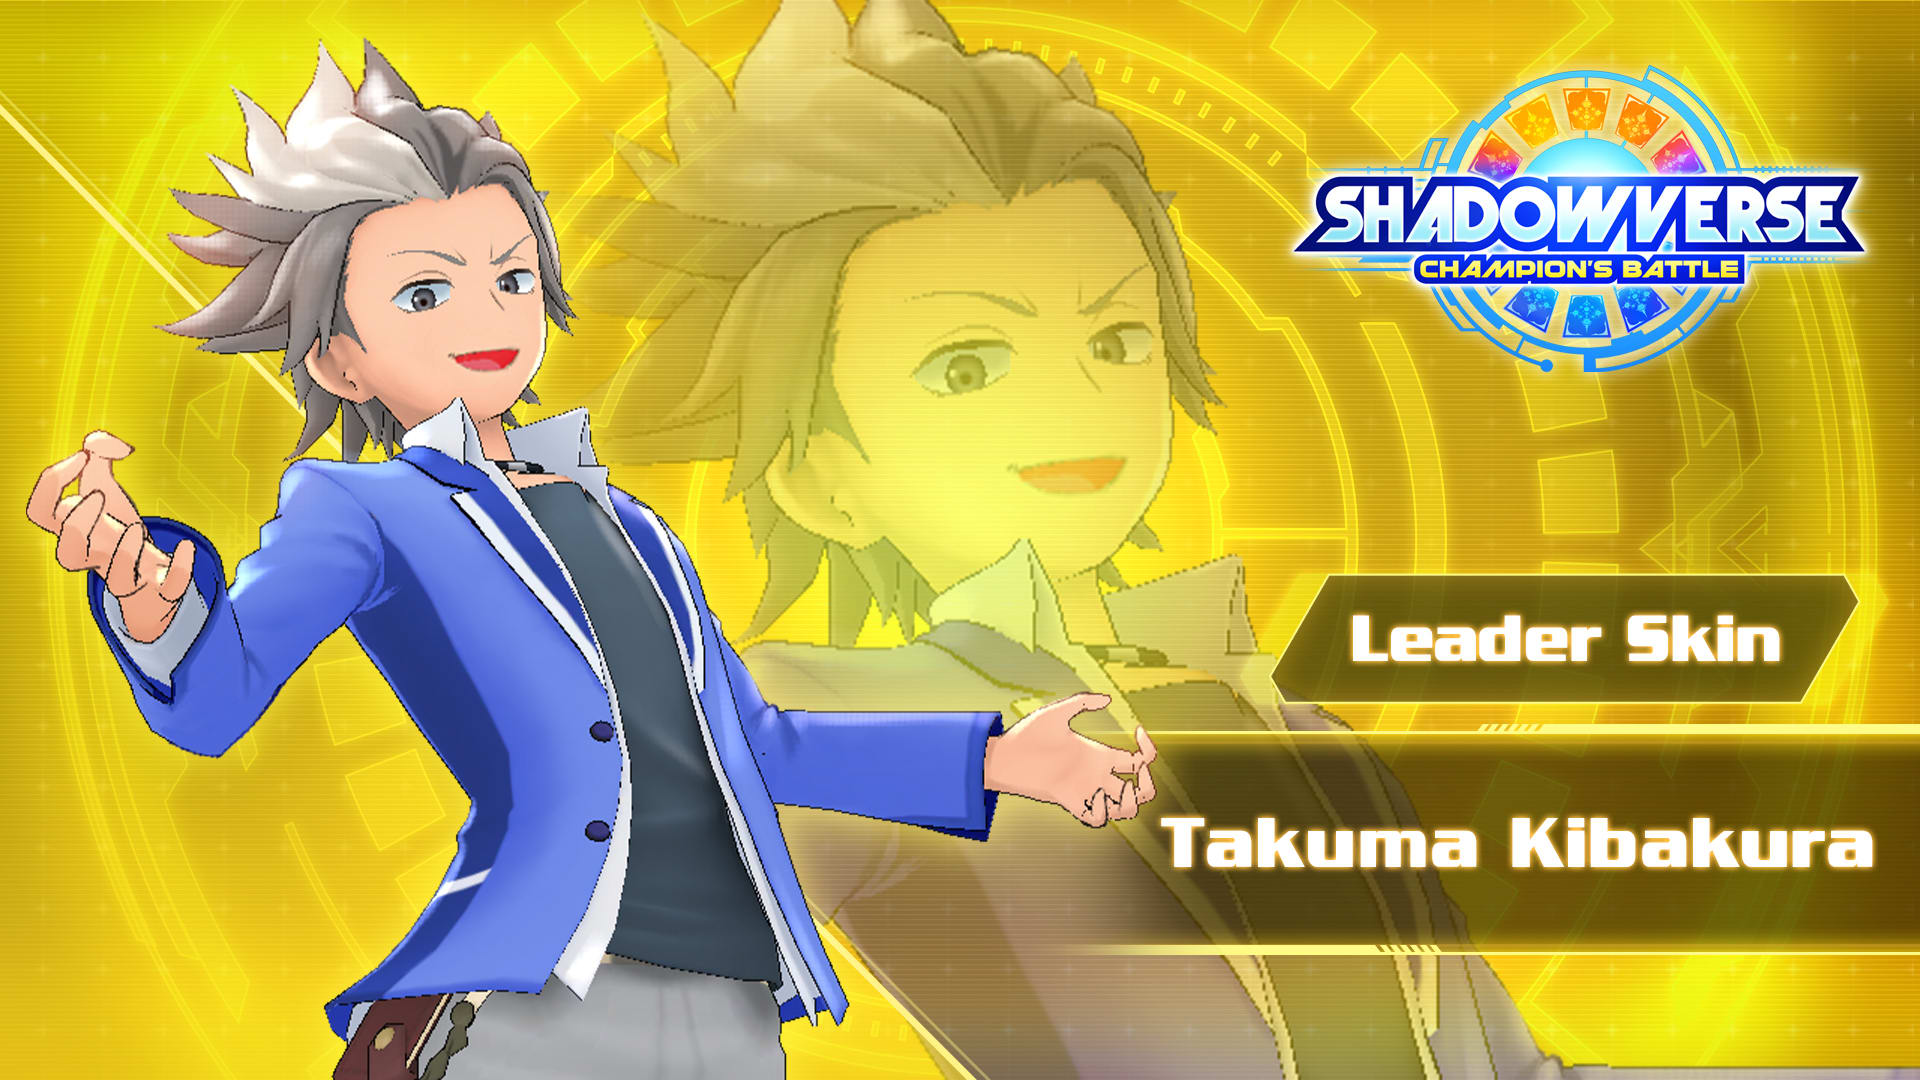 Leader Skin: "Takuma Kibakura"